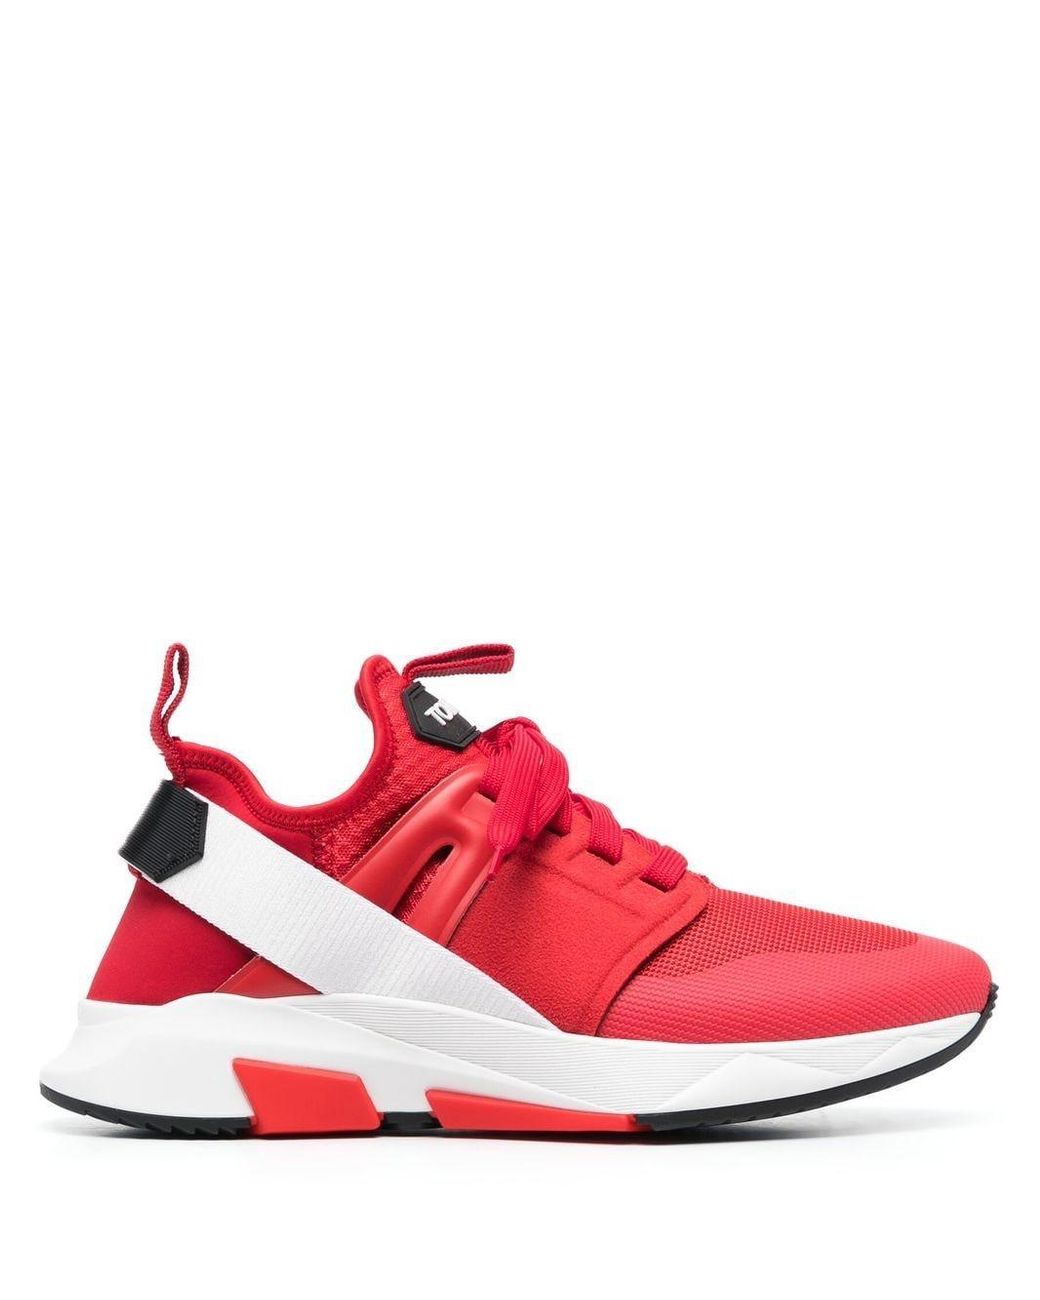 Tom Ford Alcantara Low-top Sneakers in Red for Men | Lyst